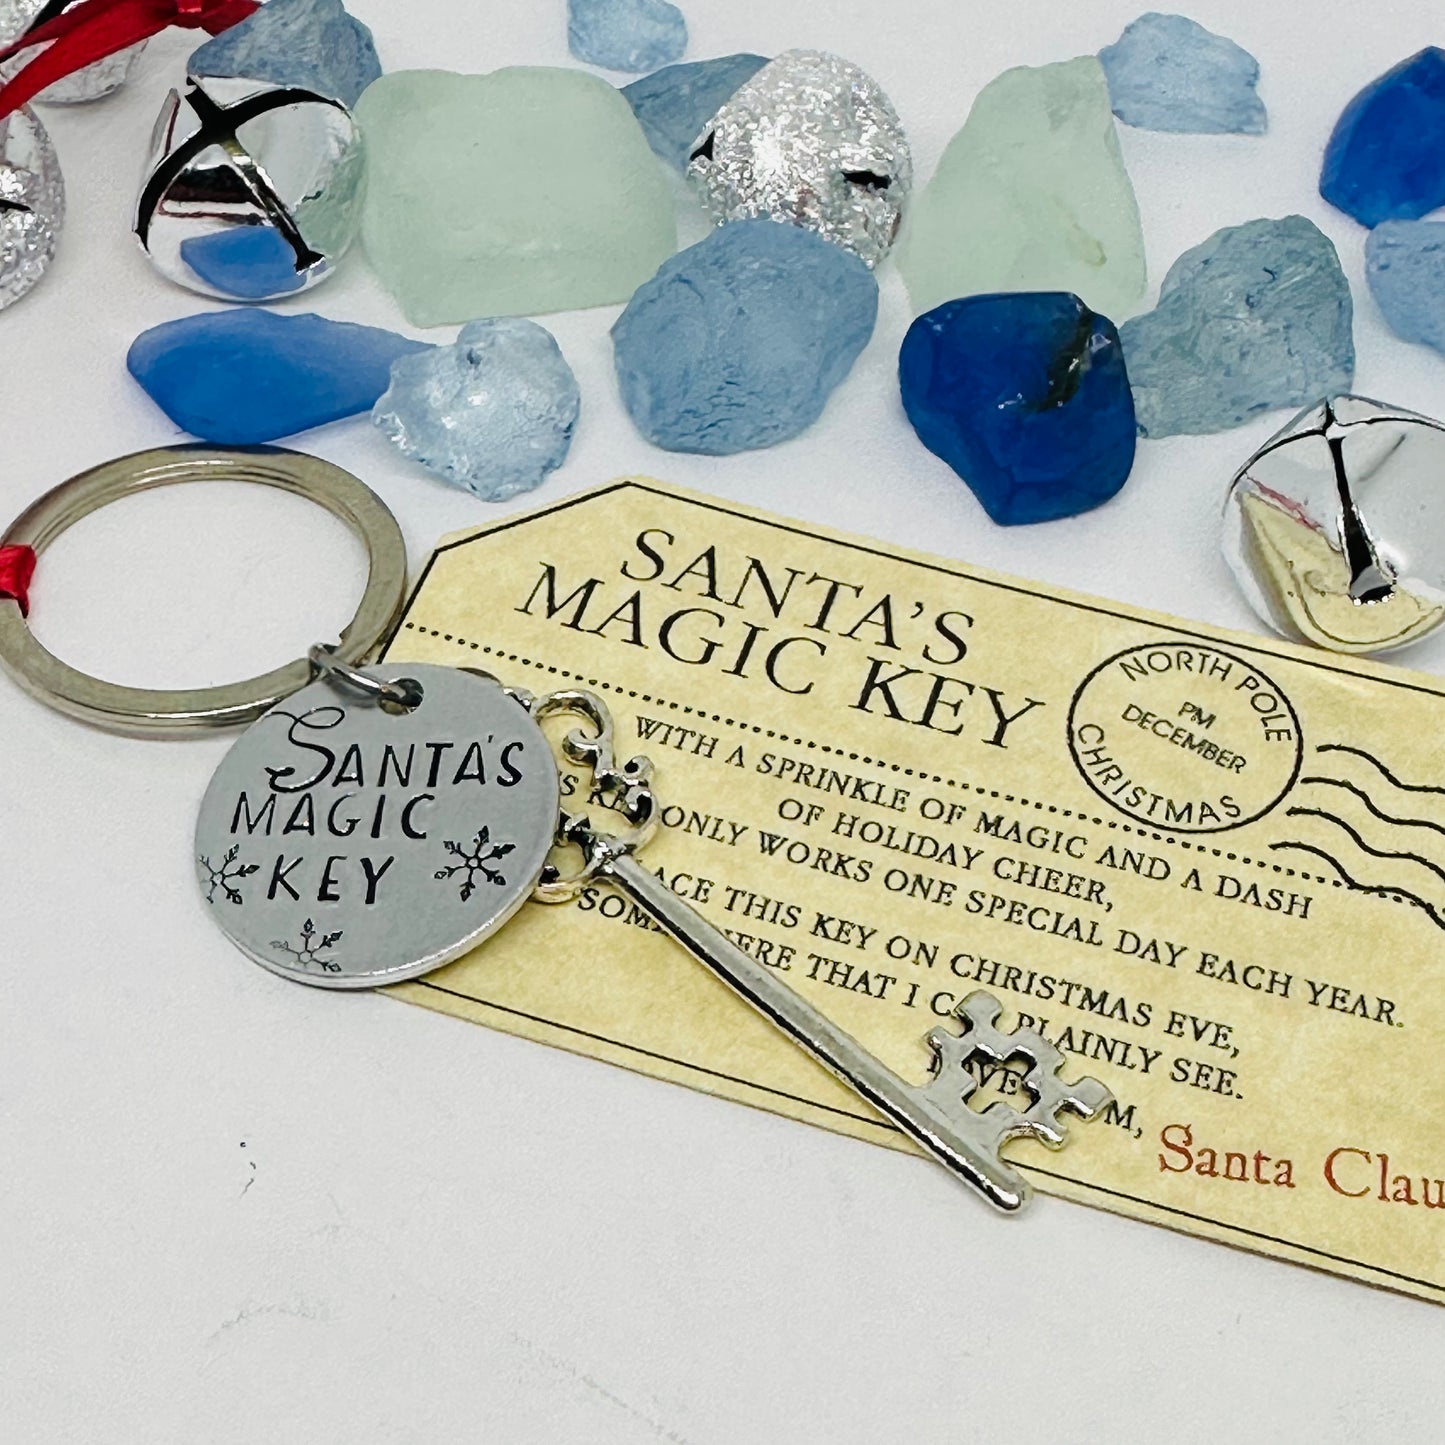 Santa’s Magic Key | Holiday Magic | Christmas Santa’s Key | Chimney Key | Christmas Eve Magic Key | Magical Chimney Key